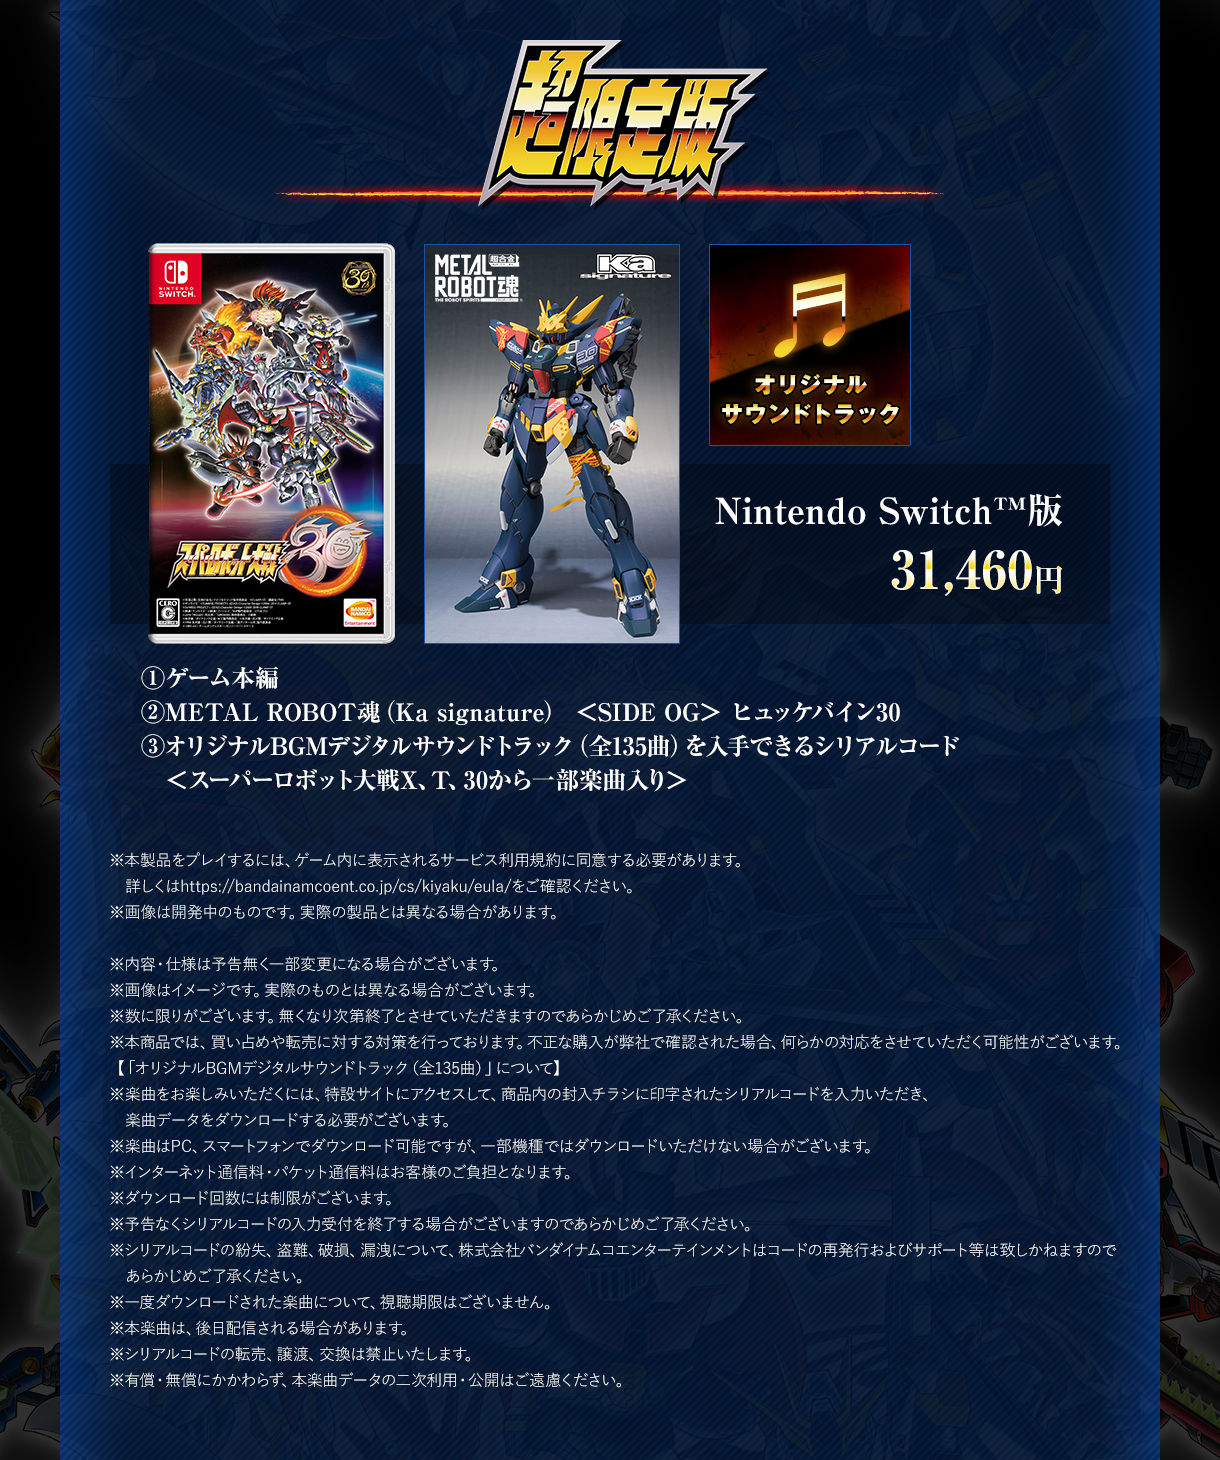 METAL ROBOT SPIRIT (Ka signature) Huckebein 30 in Super Robot Wars 30 Super Limited Edition Playstation 4 and Nintendo Switch